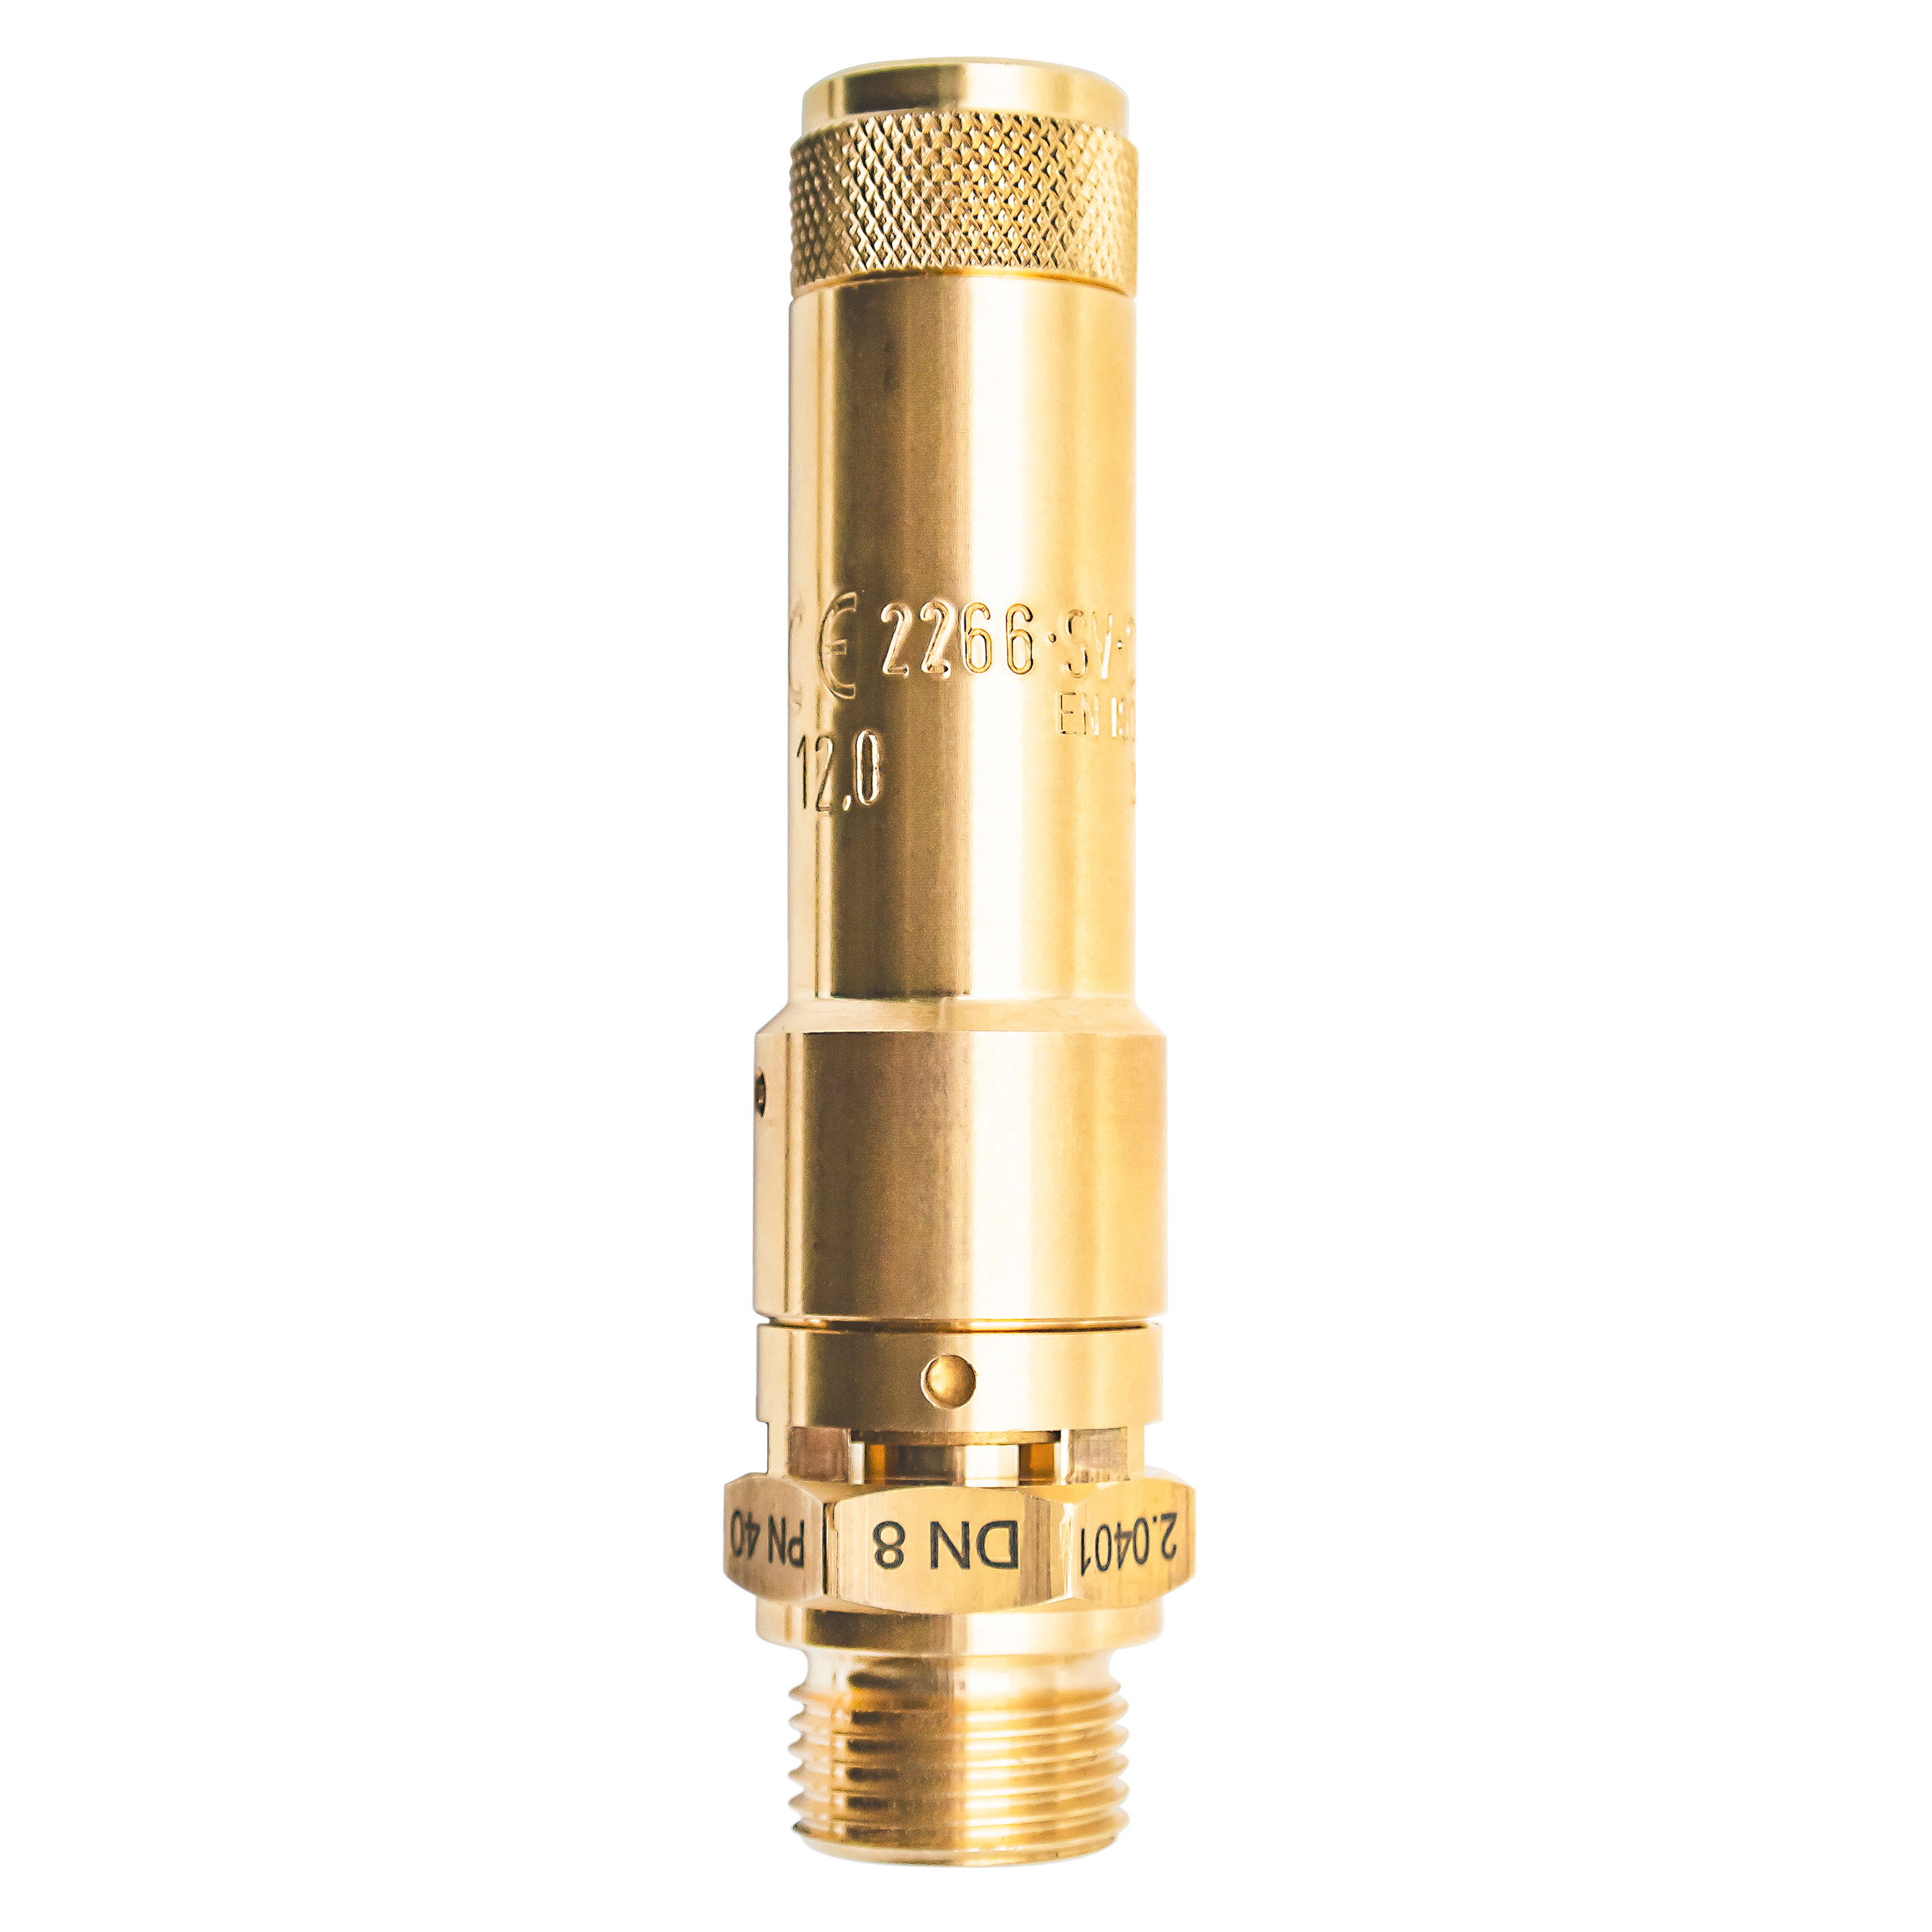 Savety valve component tested DN 8, G⅜, set pressure: 9.7 bar (140,65 psi)